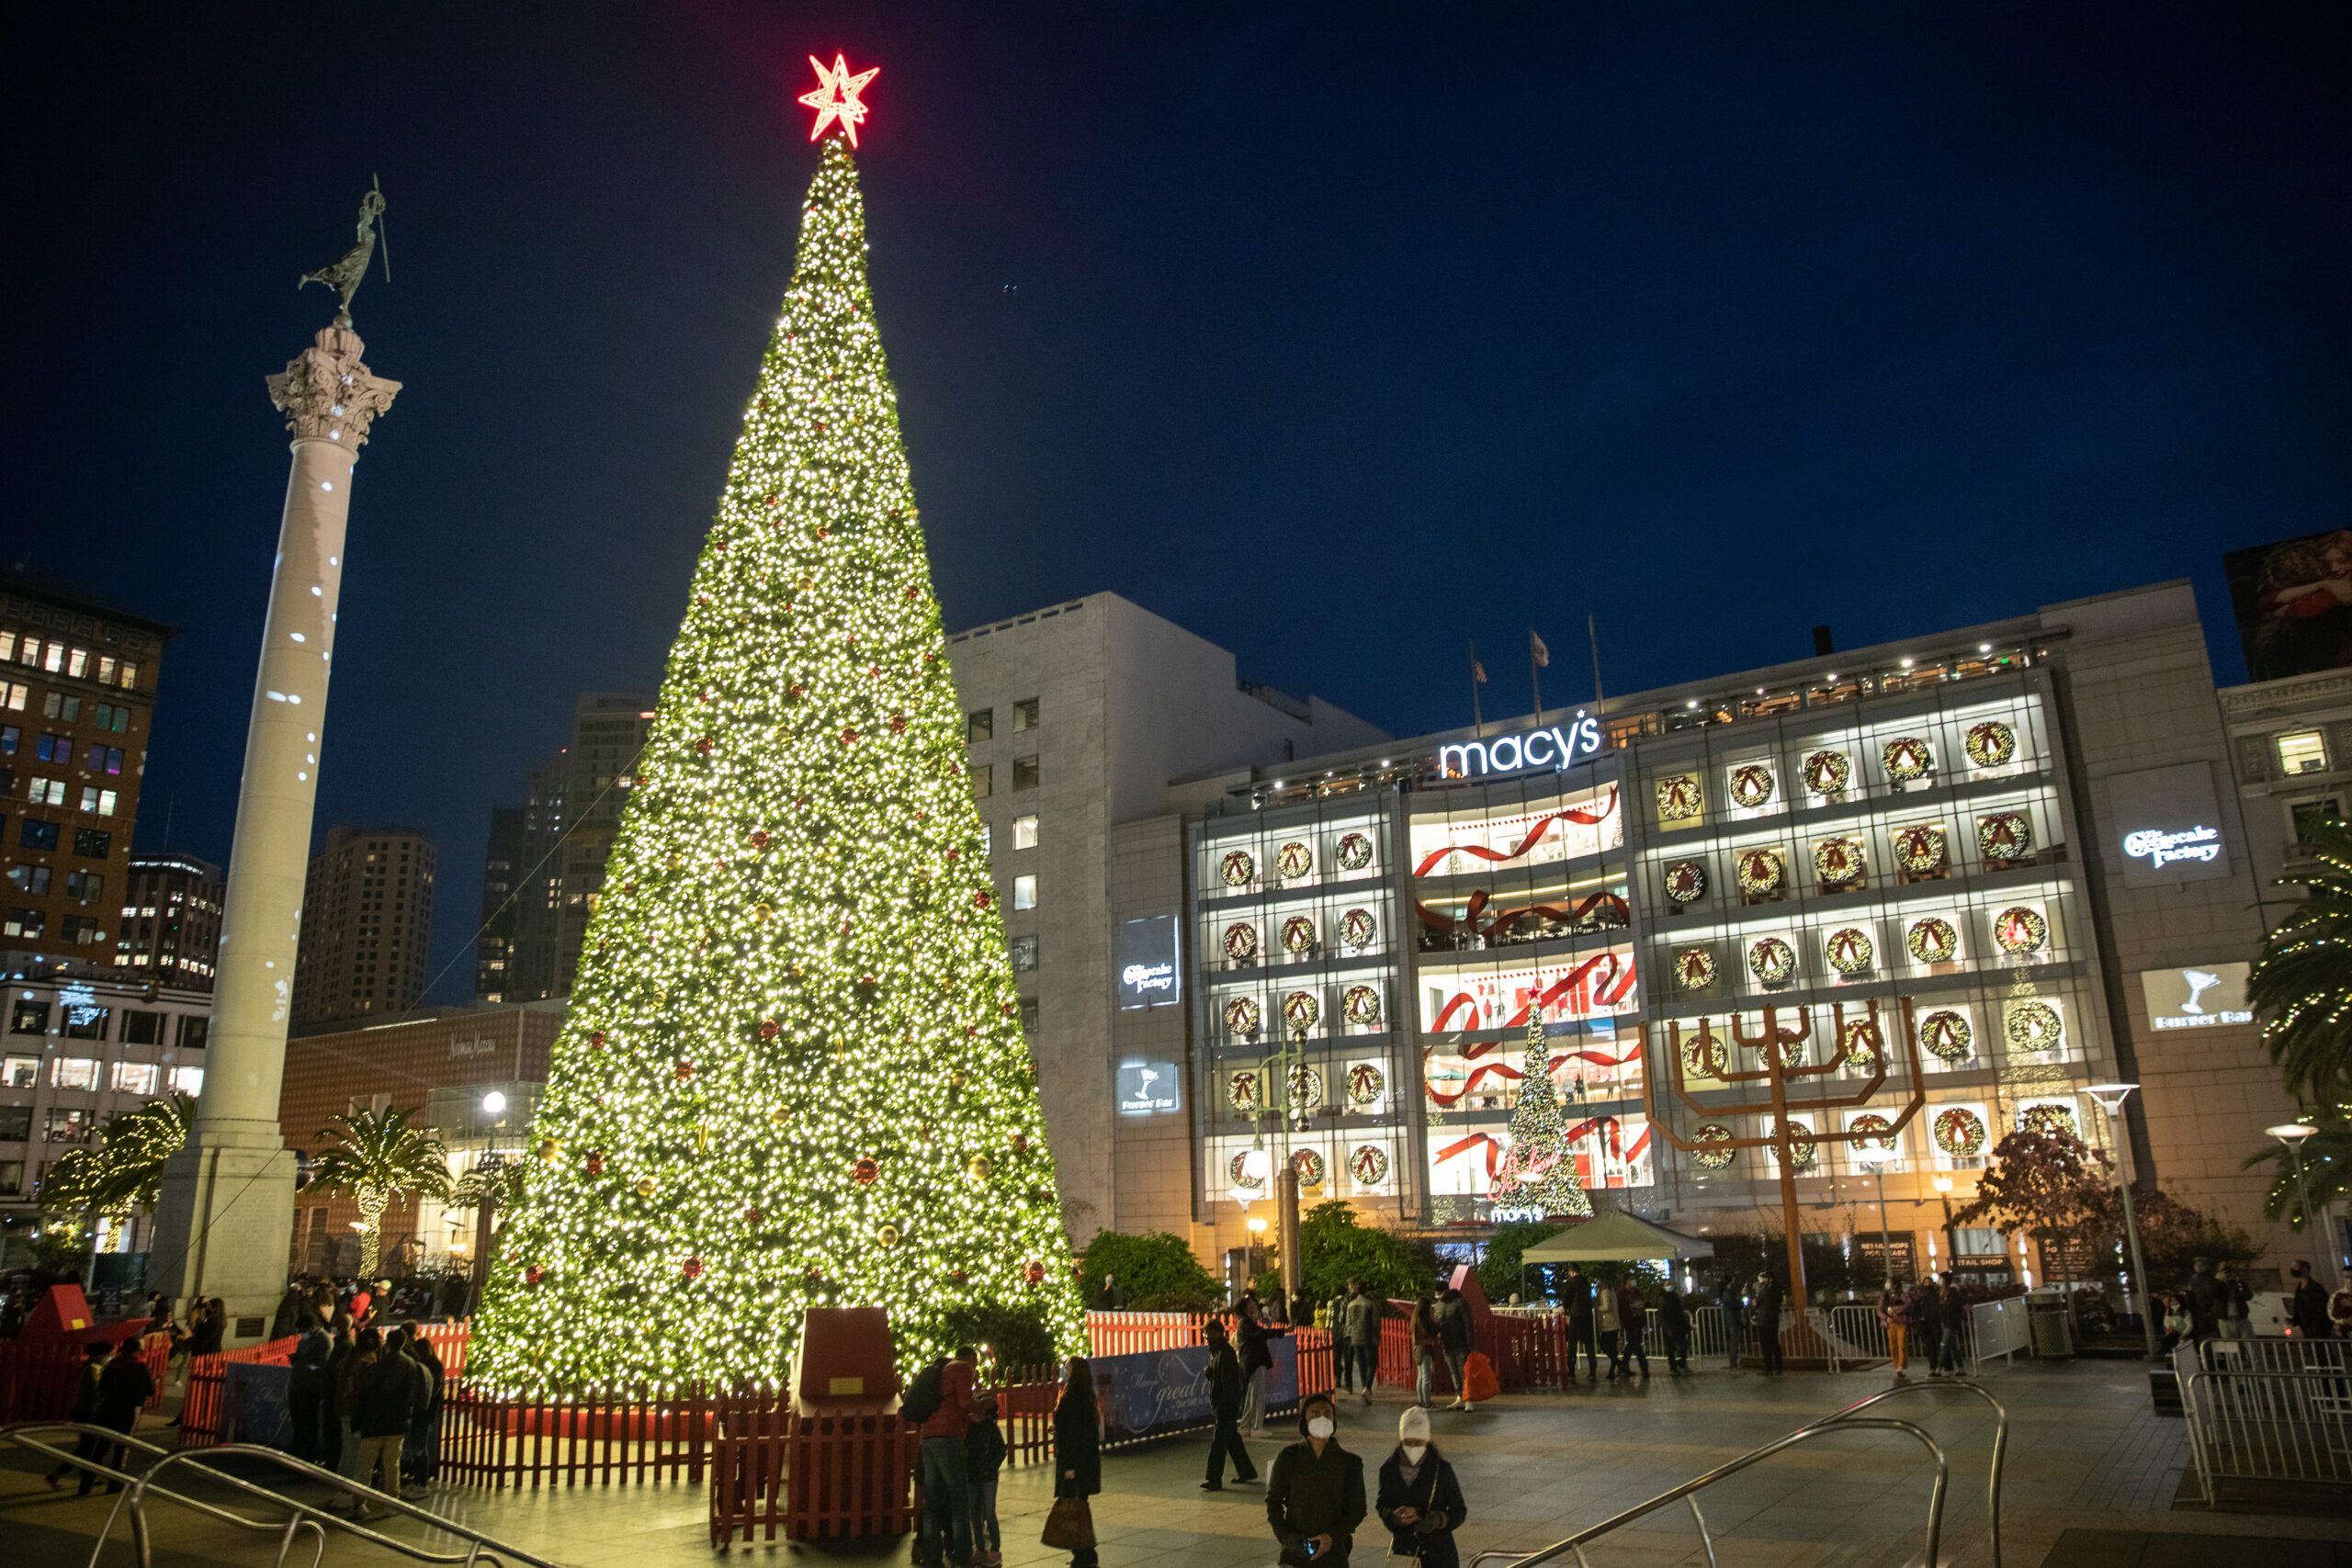 San Francisco's Union Square at Christmas: Photo Tour